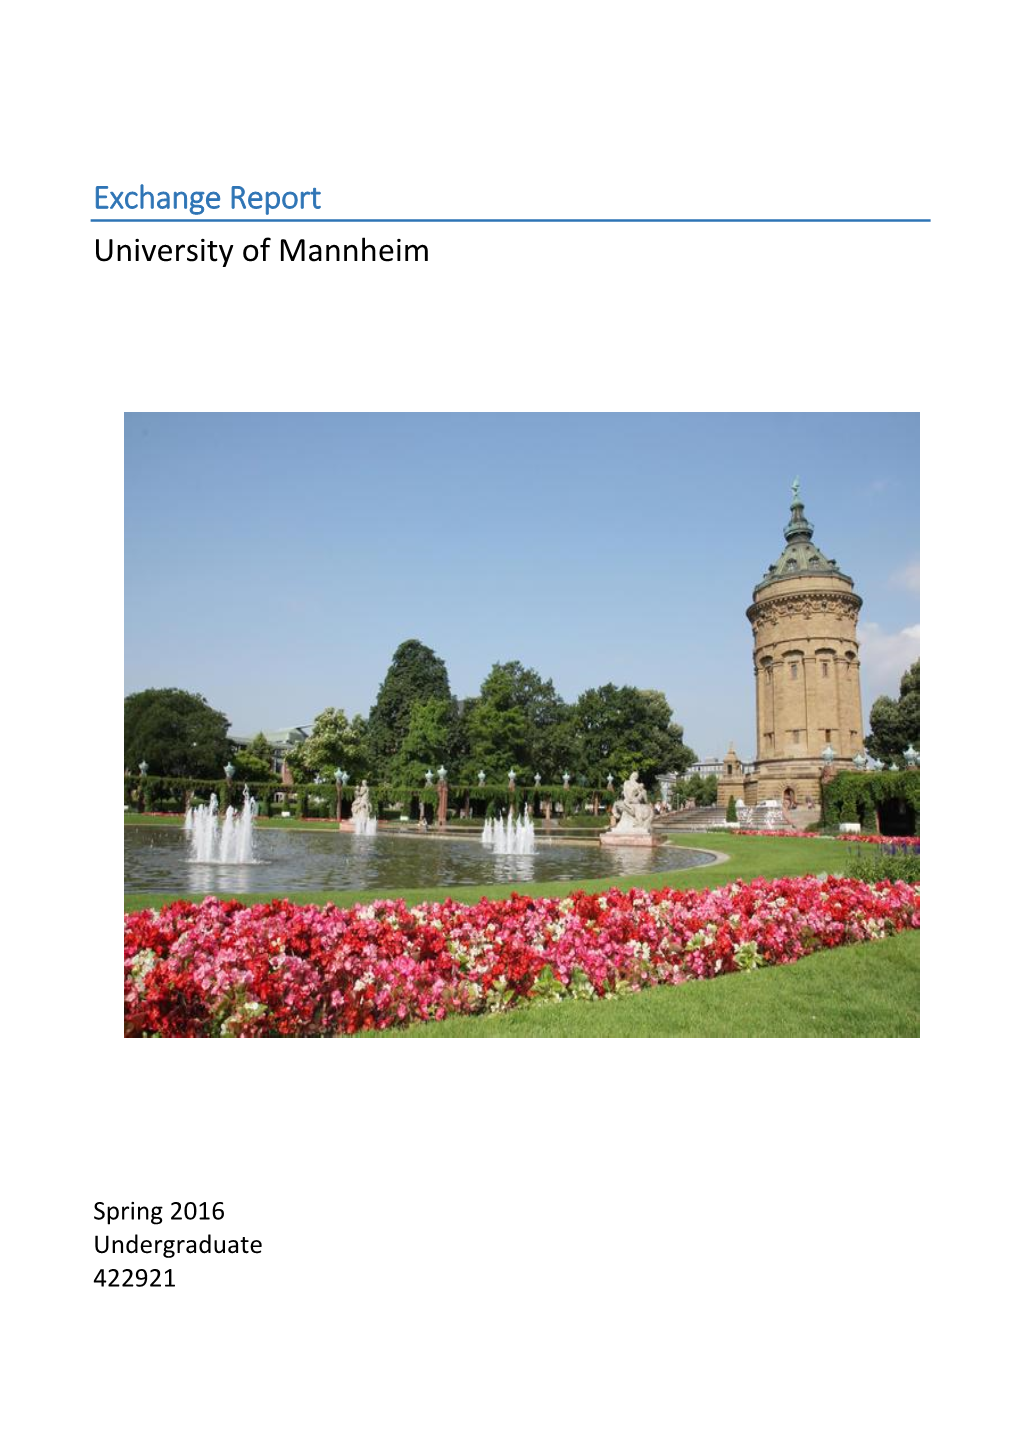 Exchange Report University of Mannheim